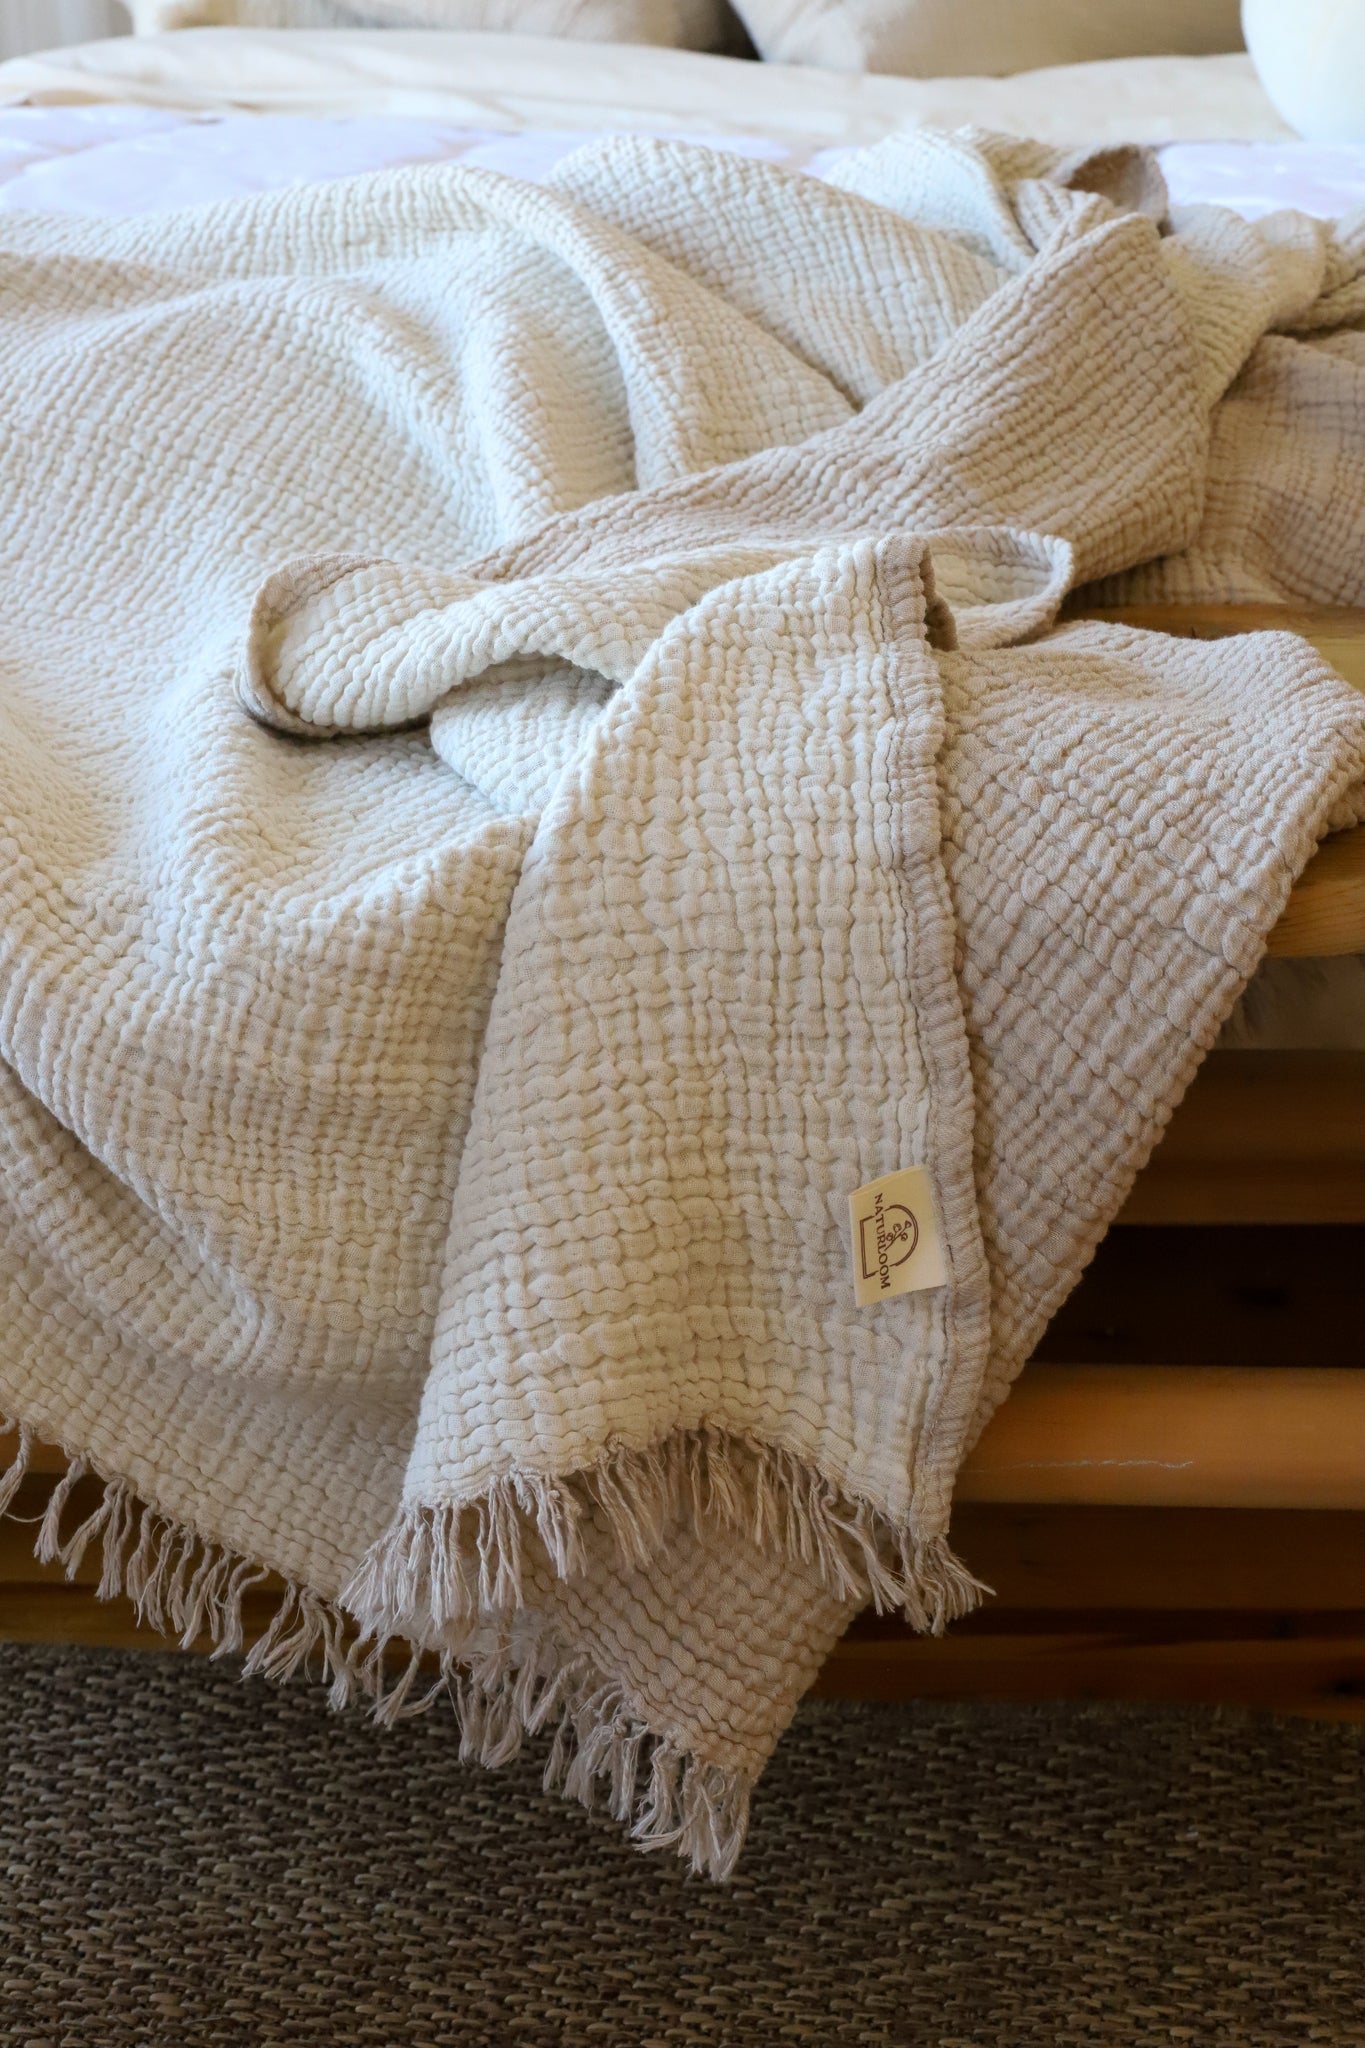 Cotton Muslin Bedspread - Beige - Home All